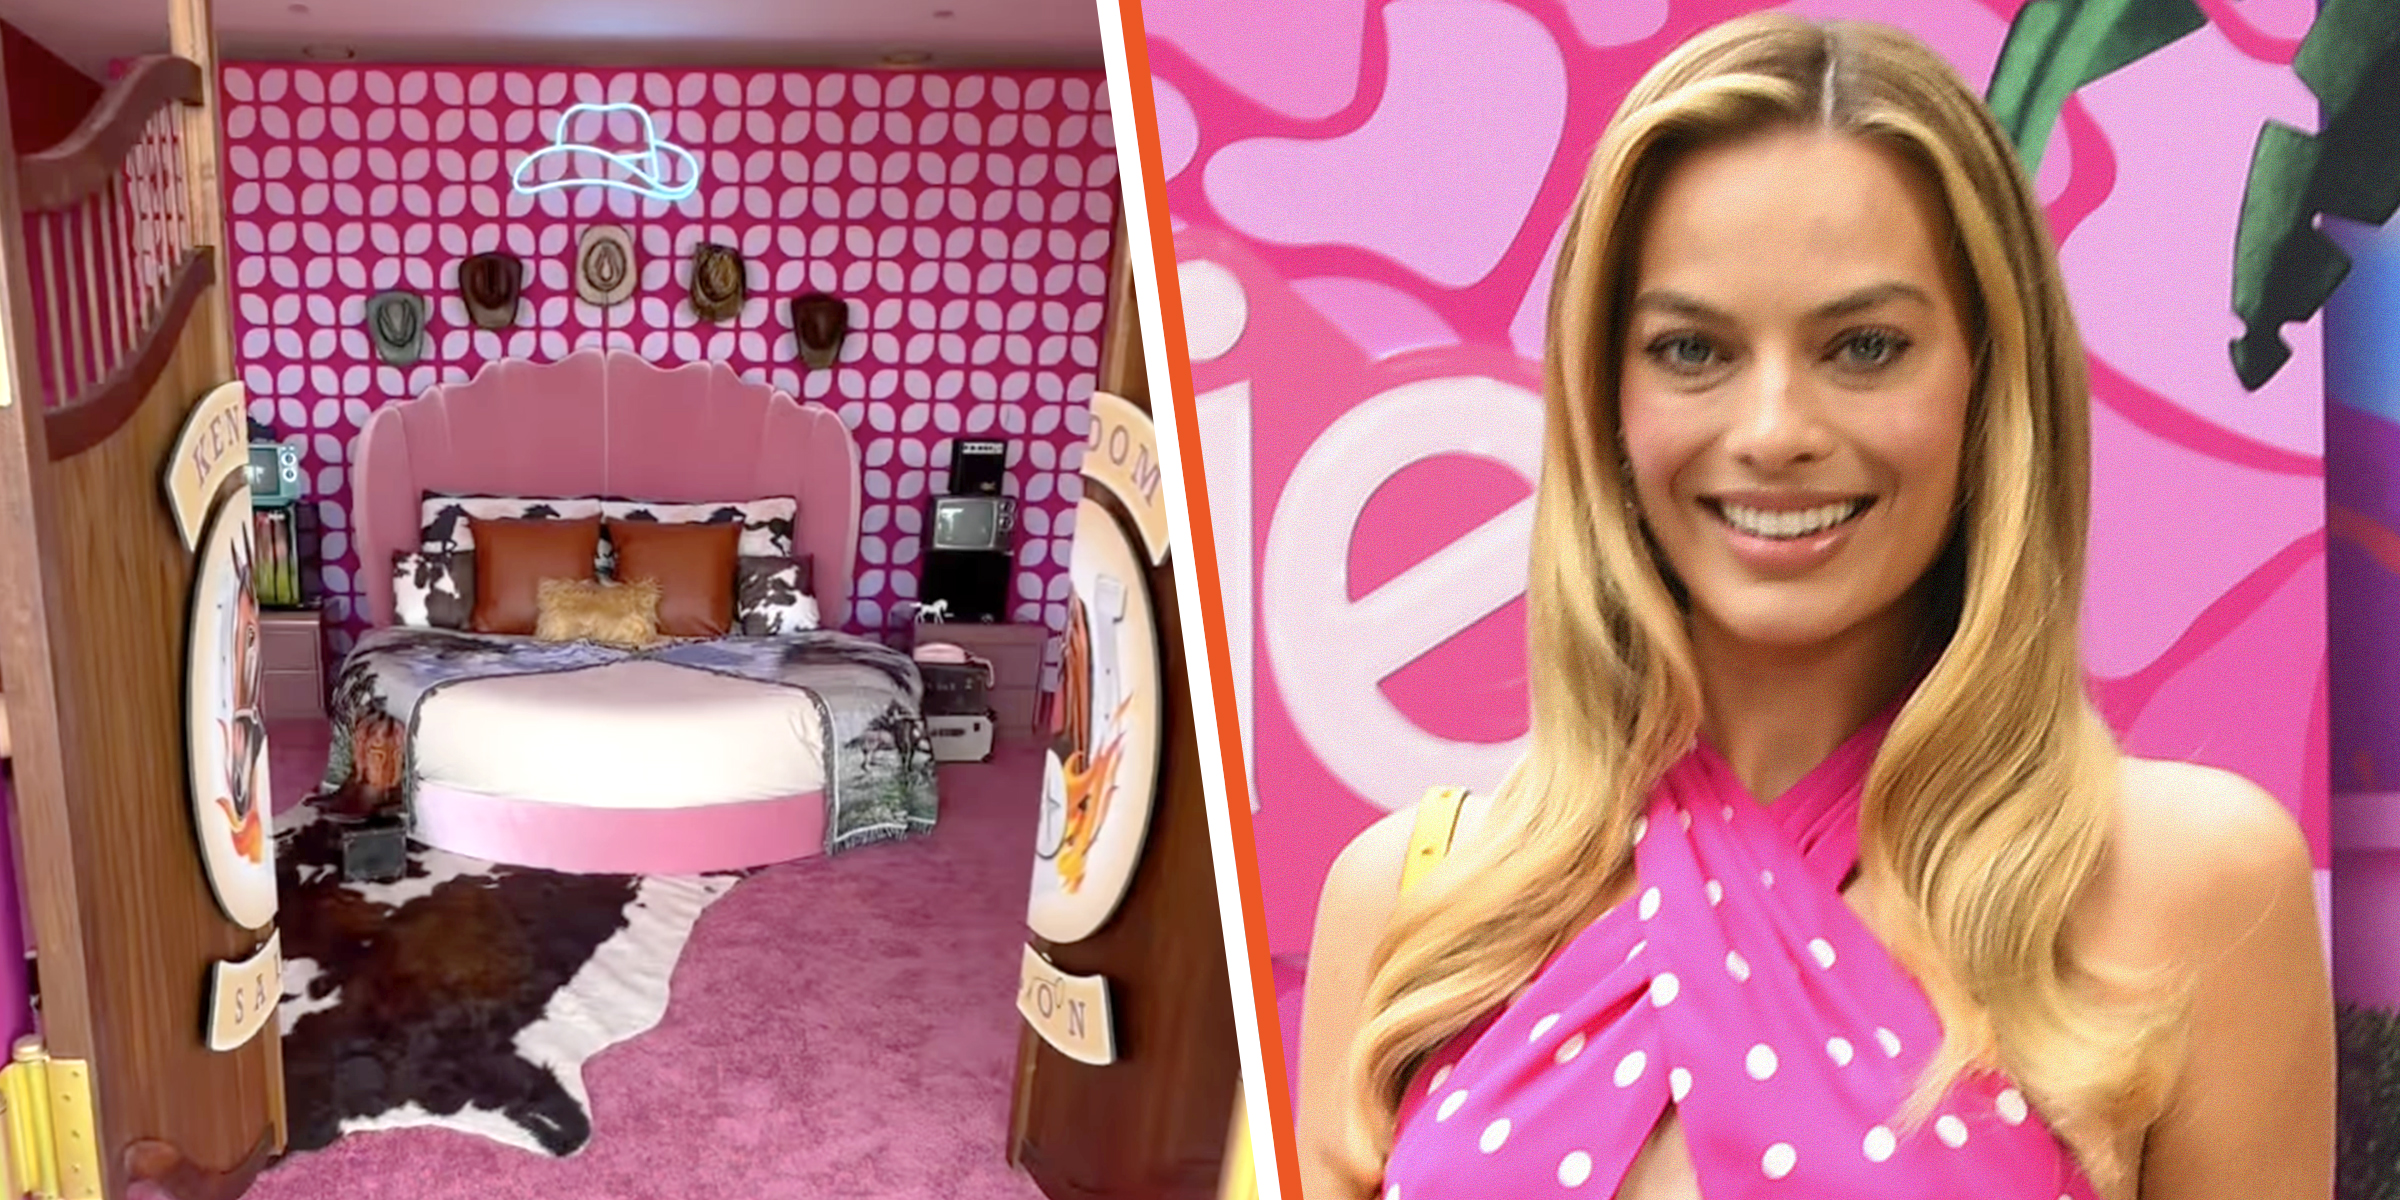 Barbie's DreamHouse in Malibu | Margot Robbie | Sources: instagram.com/variety | Getty Images